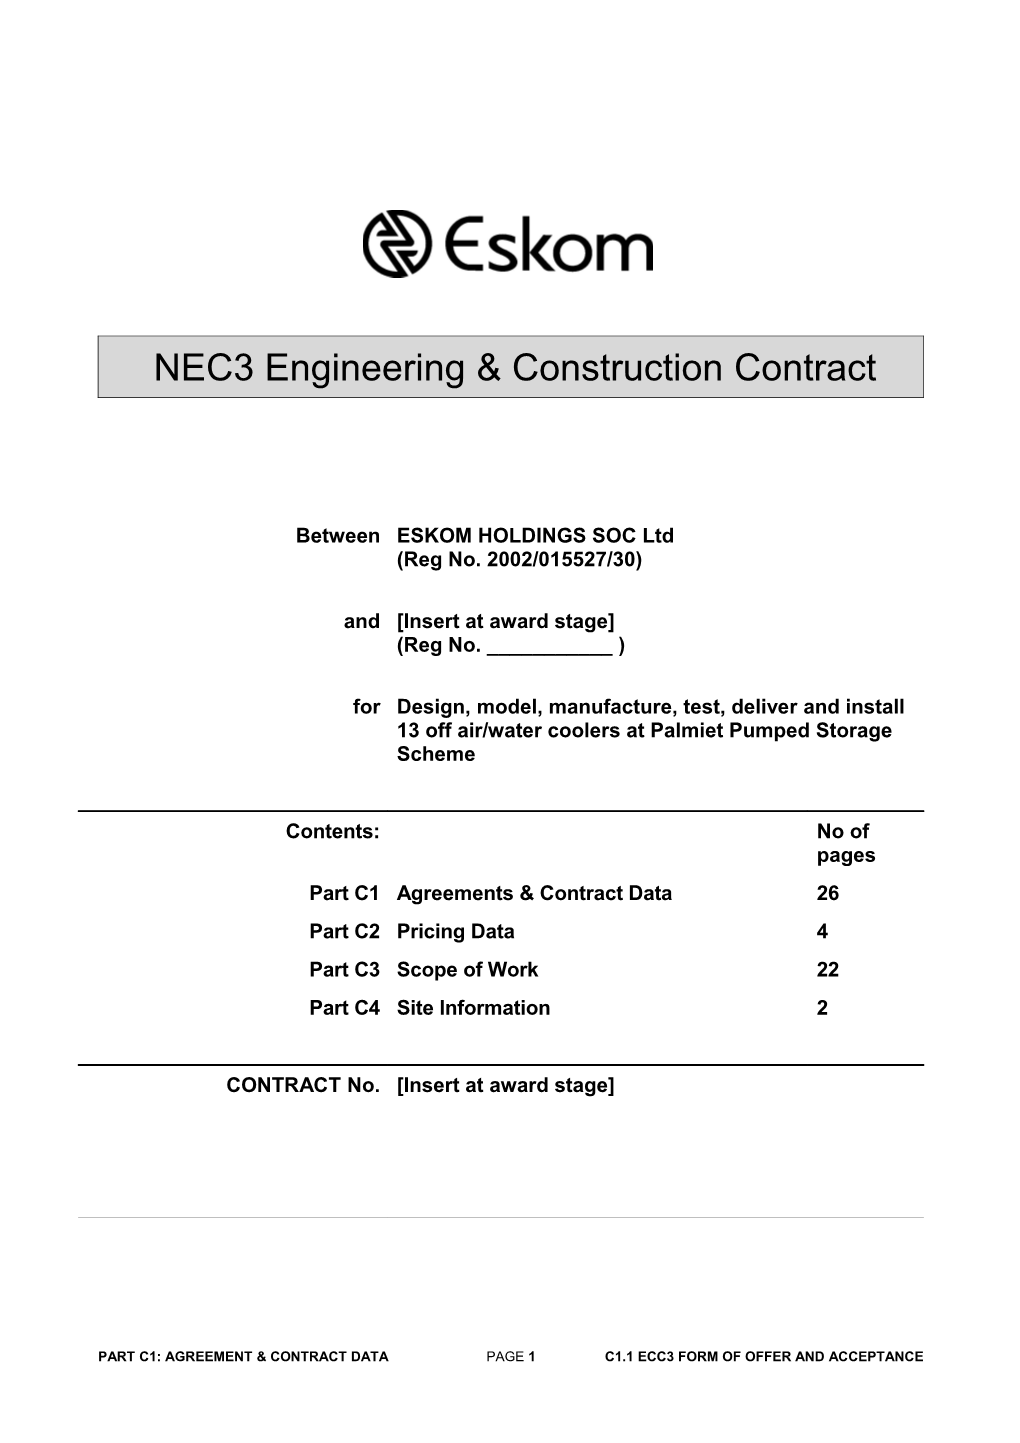 Eskom Holdings SOC Ltdcontract Number ______